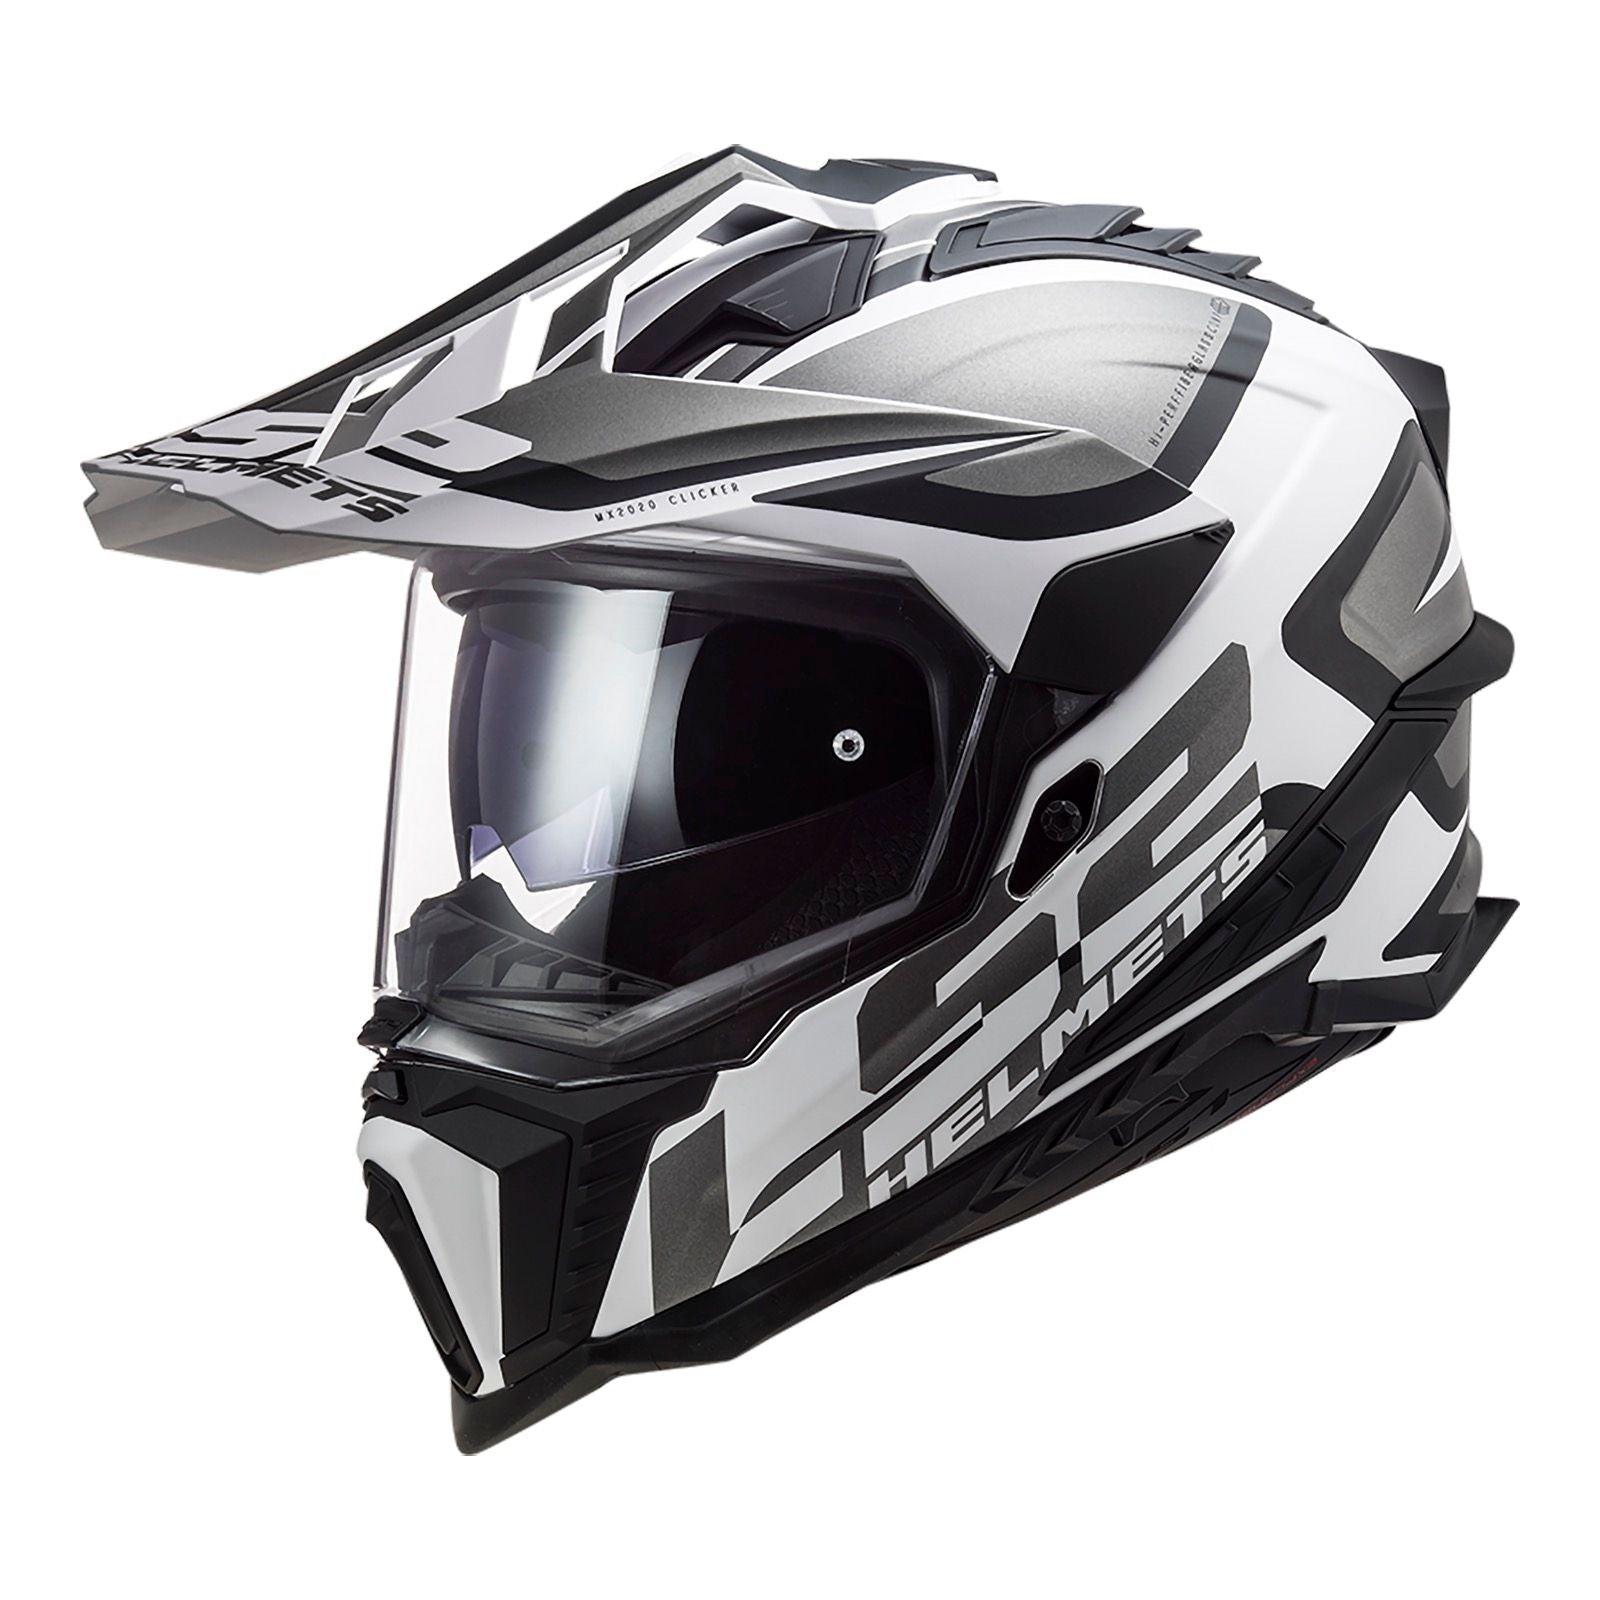 New LS2 Explorer Alter Helmet - Matte Black / White (S) #LS2MX701ALTMBWS